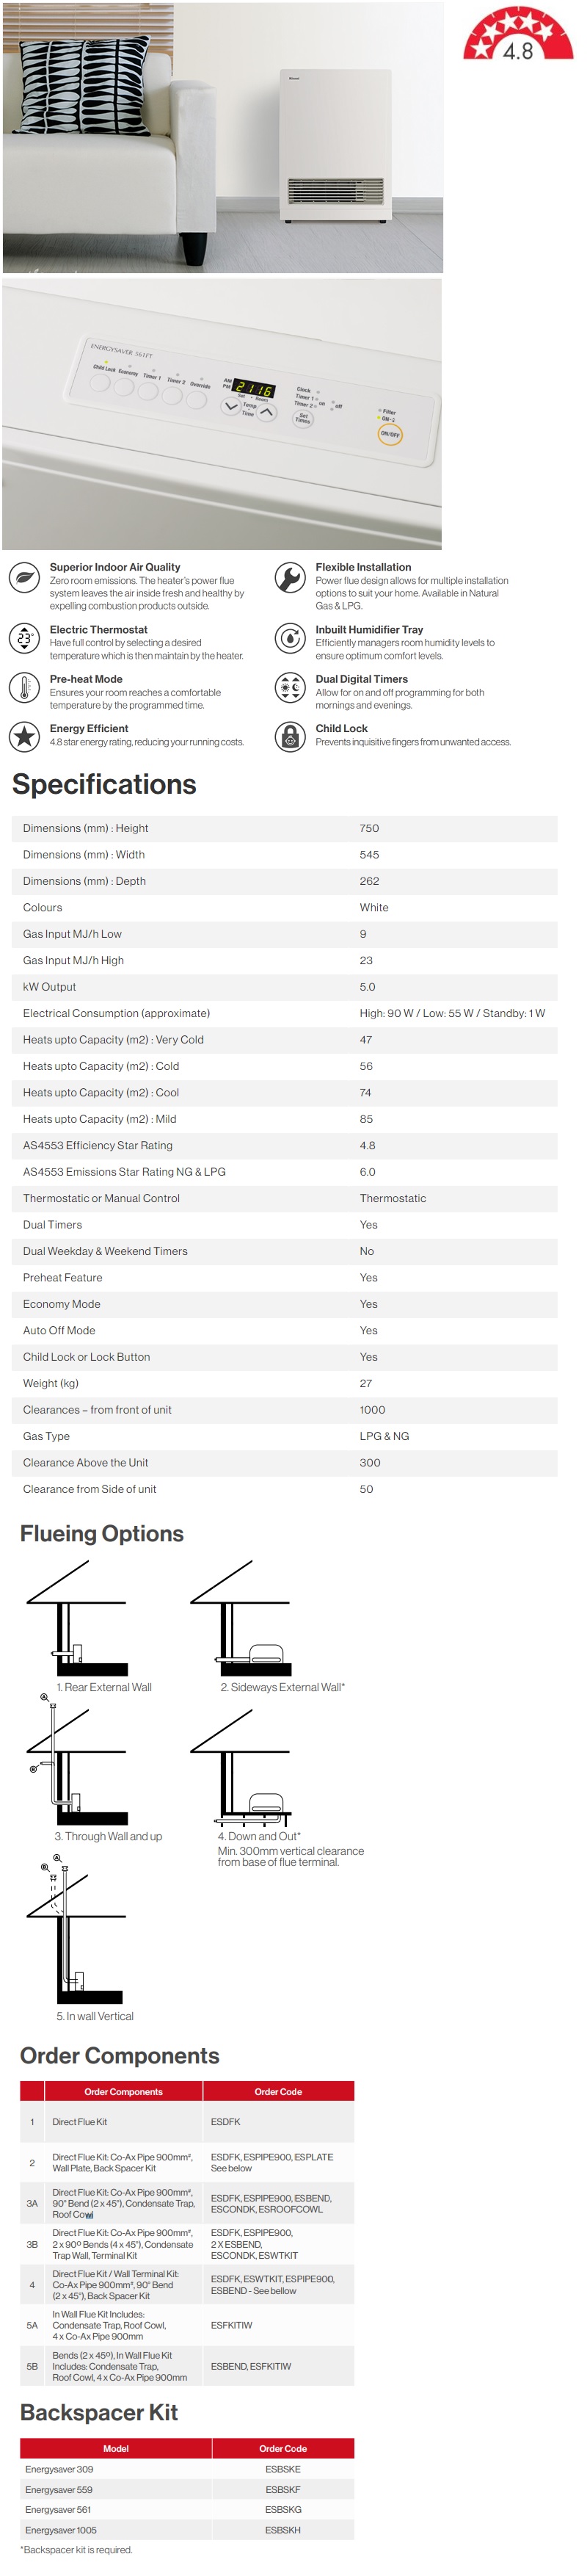 Rinnai Energysaver 561FT Heater specifications